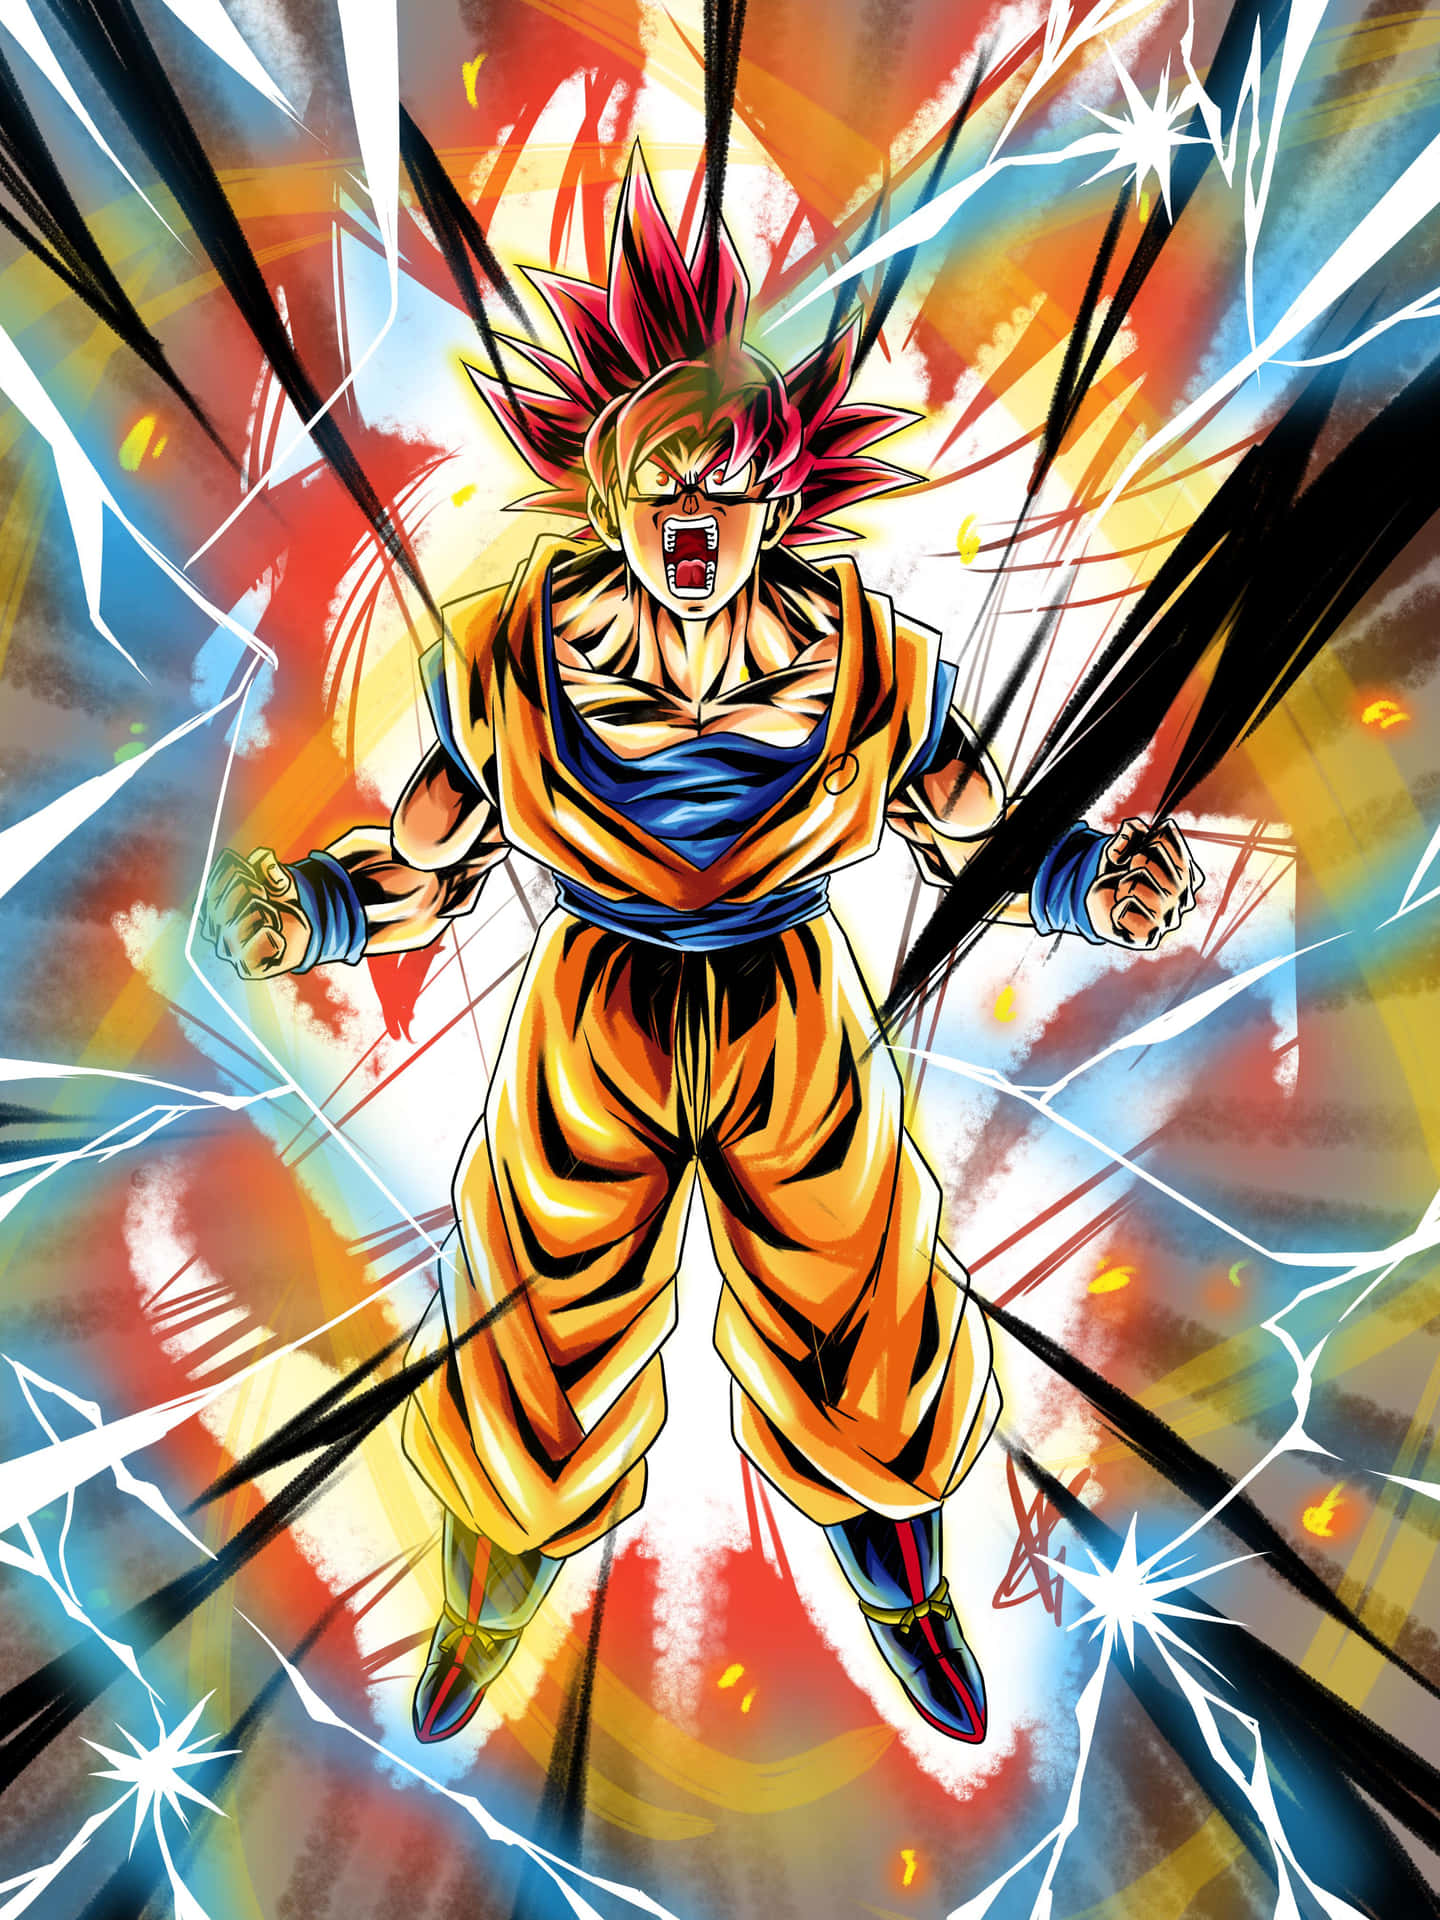 "Goku pushing his limits with Ultra Instinct!"